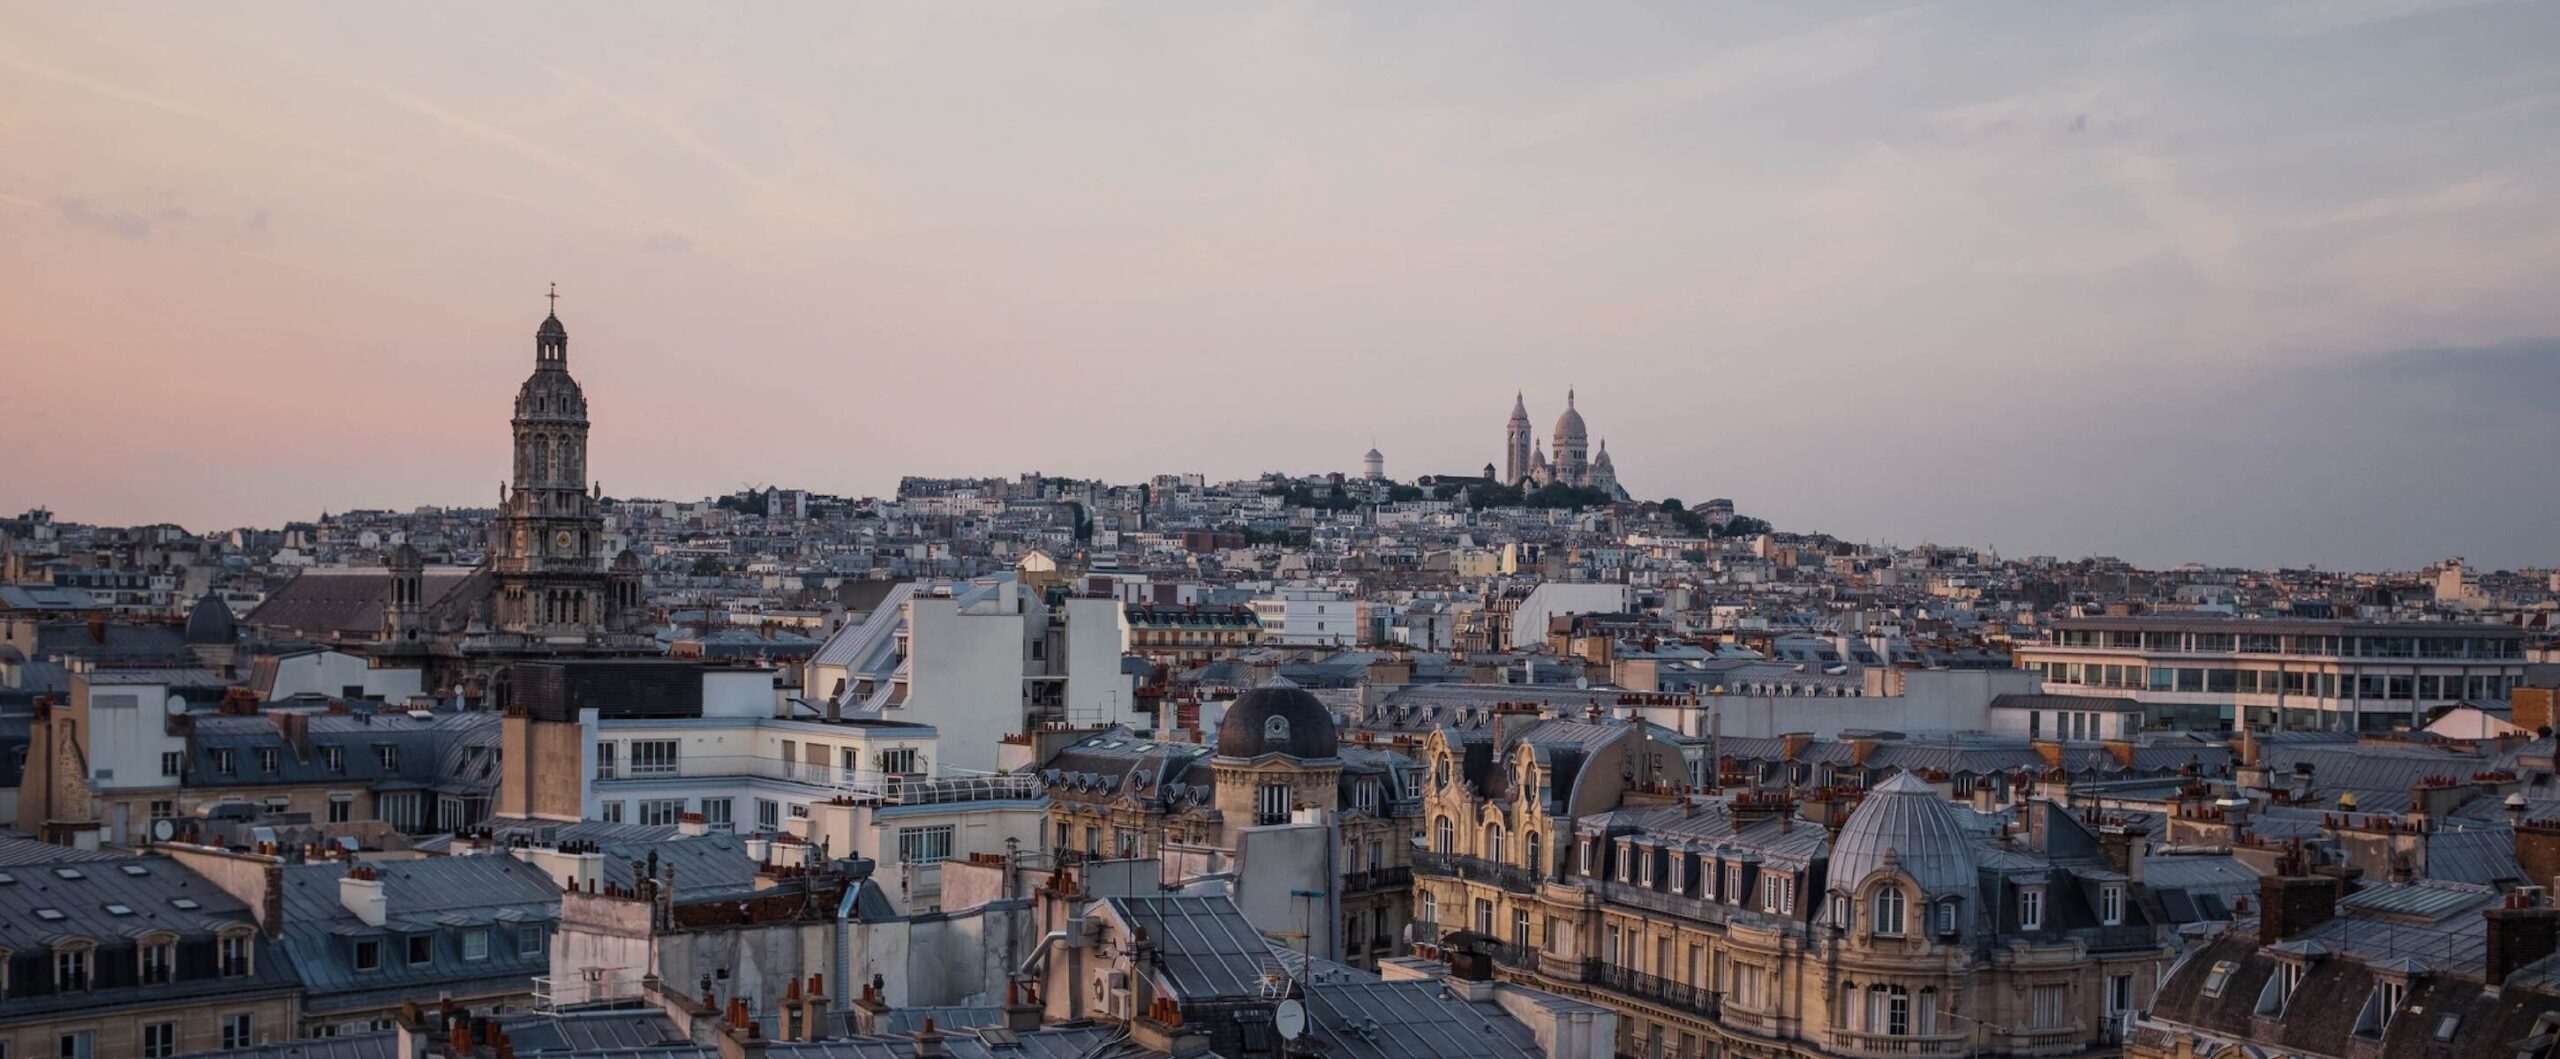 Paris skyline at dusk with iconic Sacré-Cœur Basilica.